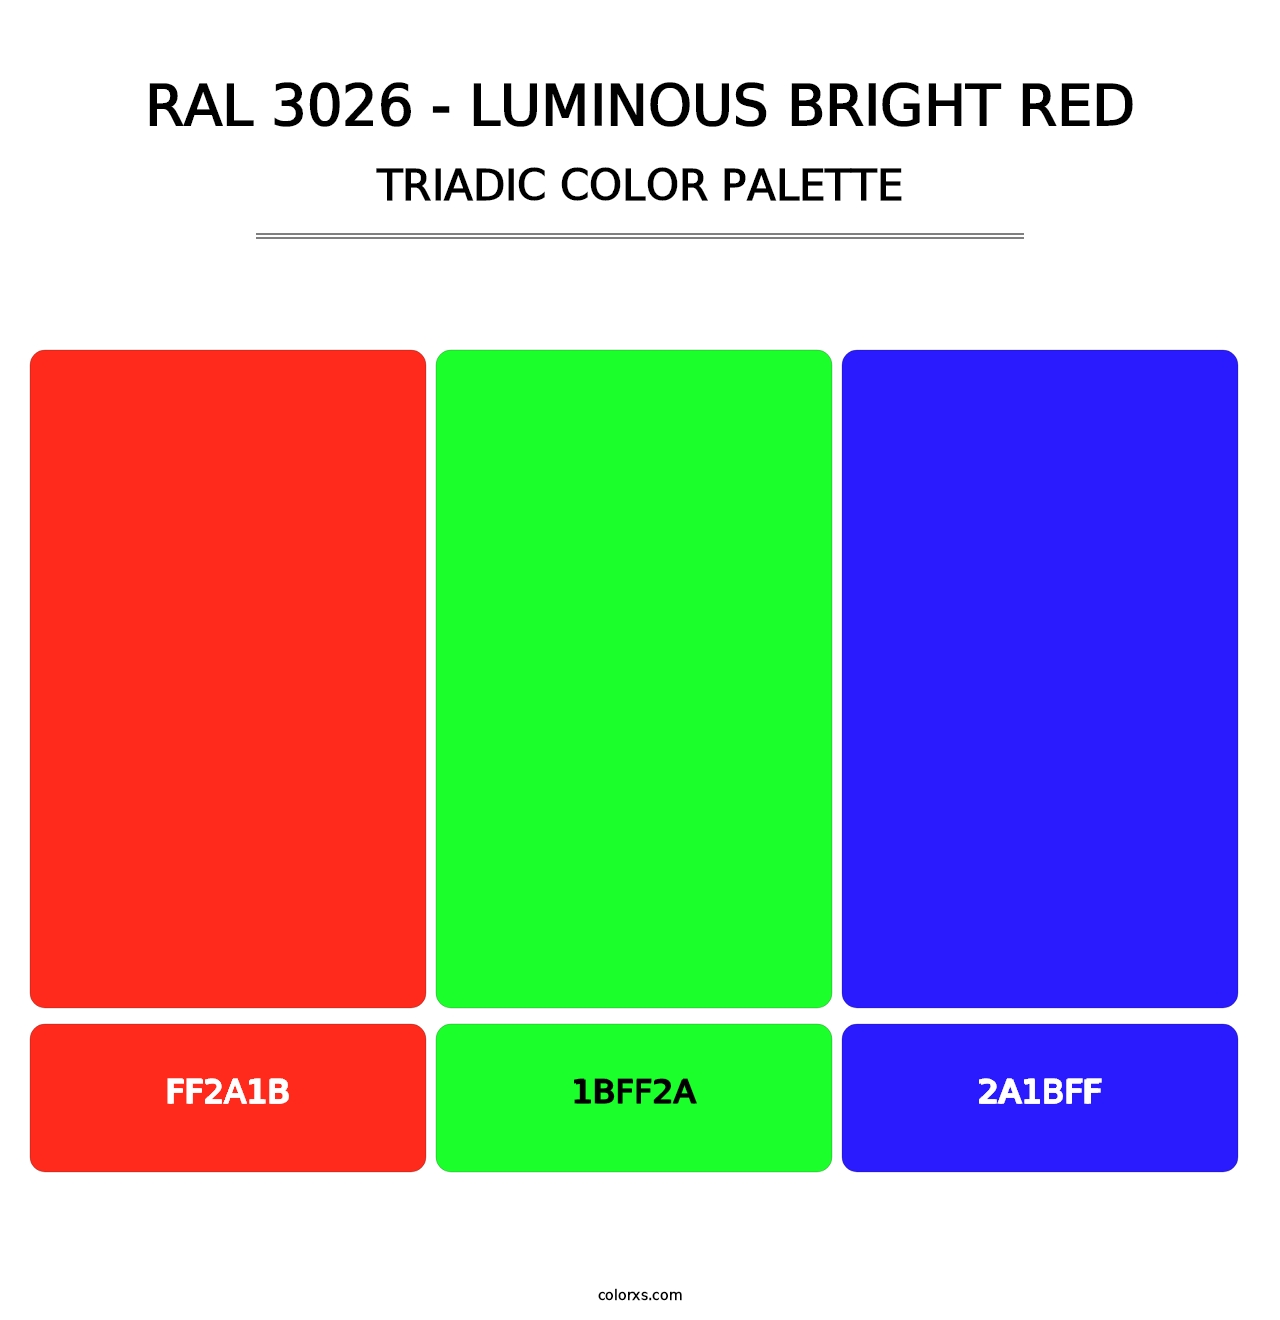 RAL 3026 - Luminous Bright Red - Triadic Color Palette